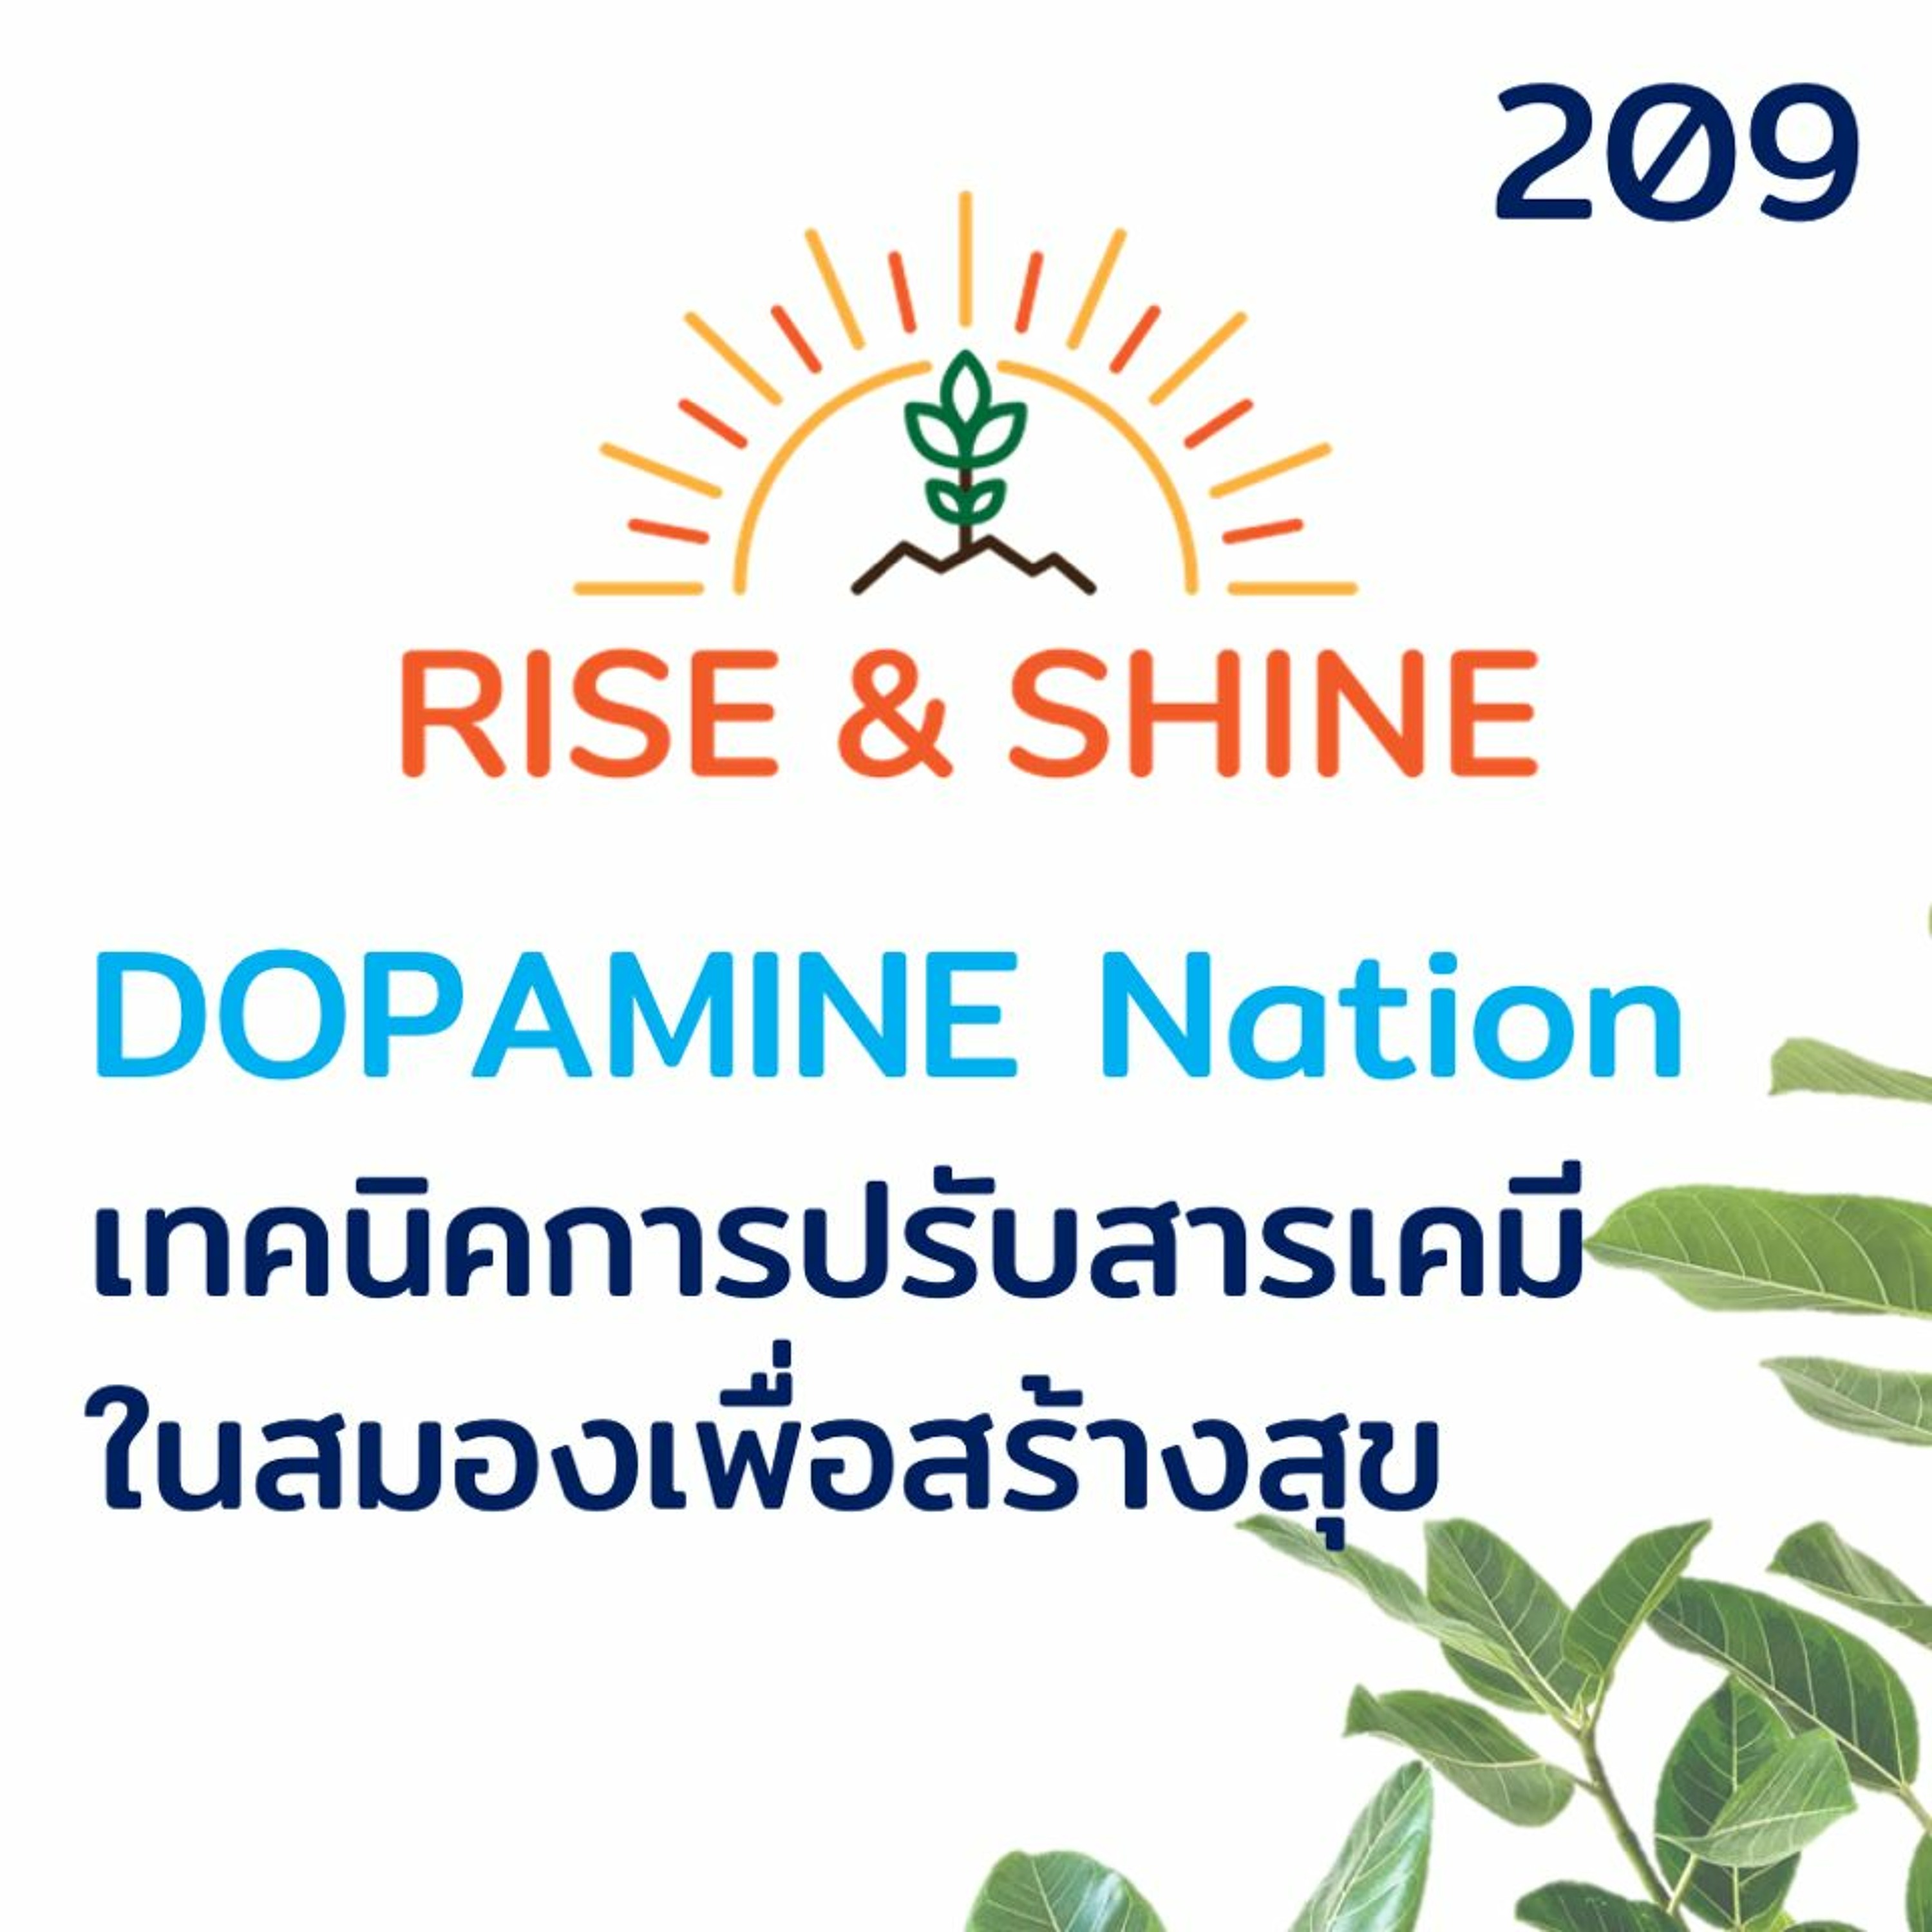 Rise & Shine 209 DOPAMINE Nation เทคนิคการปรับสารเคมีในสมองเพื่อสร้างสุข